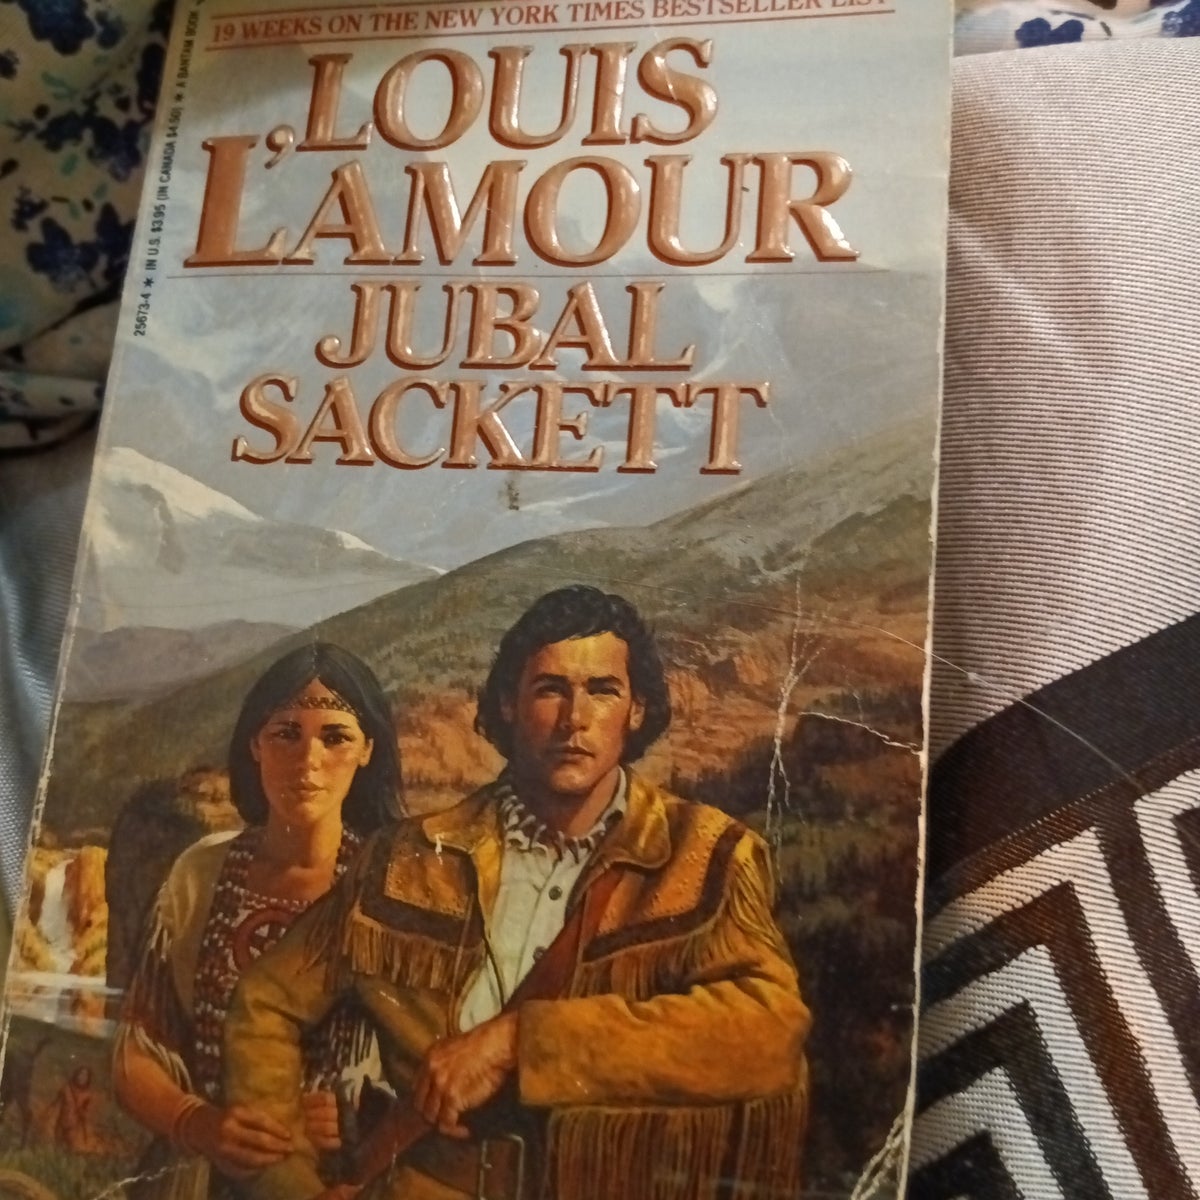 Jubal Sackett [Book]